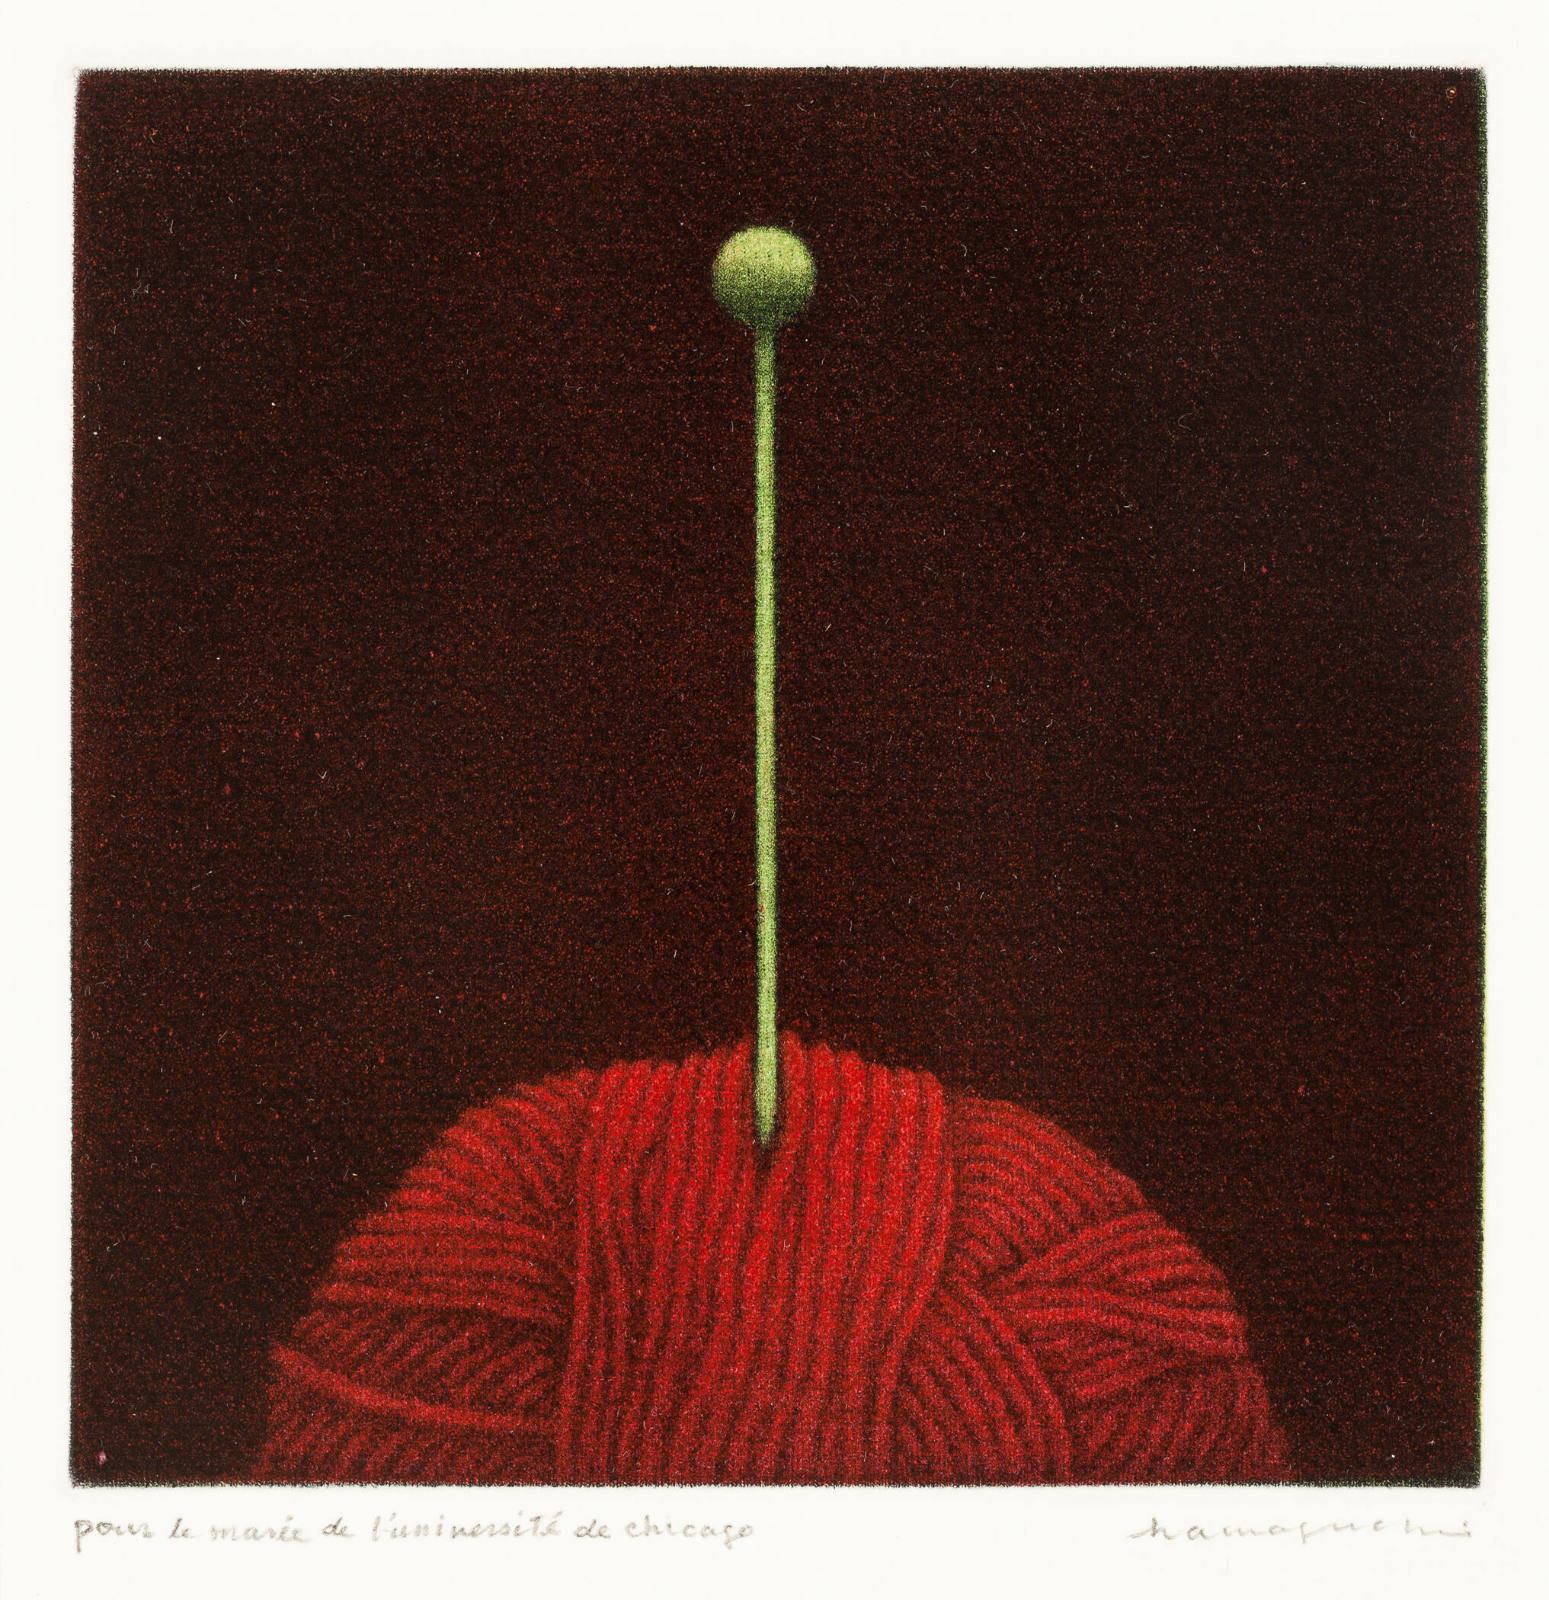 Pelote (Ball of Yarn)